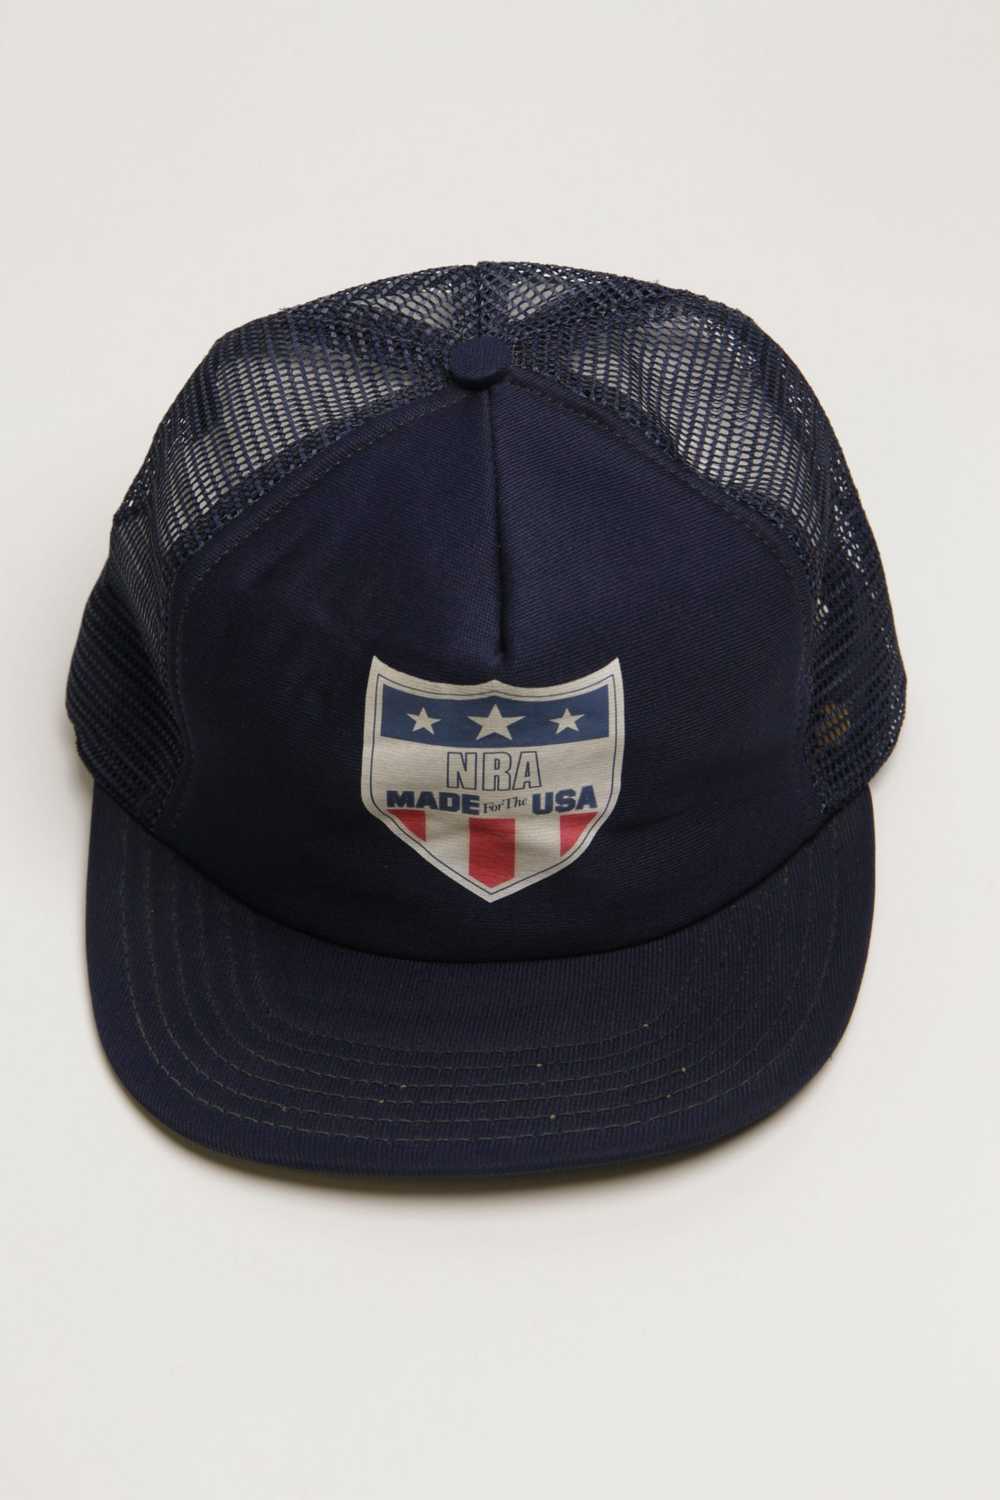 NRA Trucker Hat - image 1